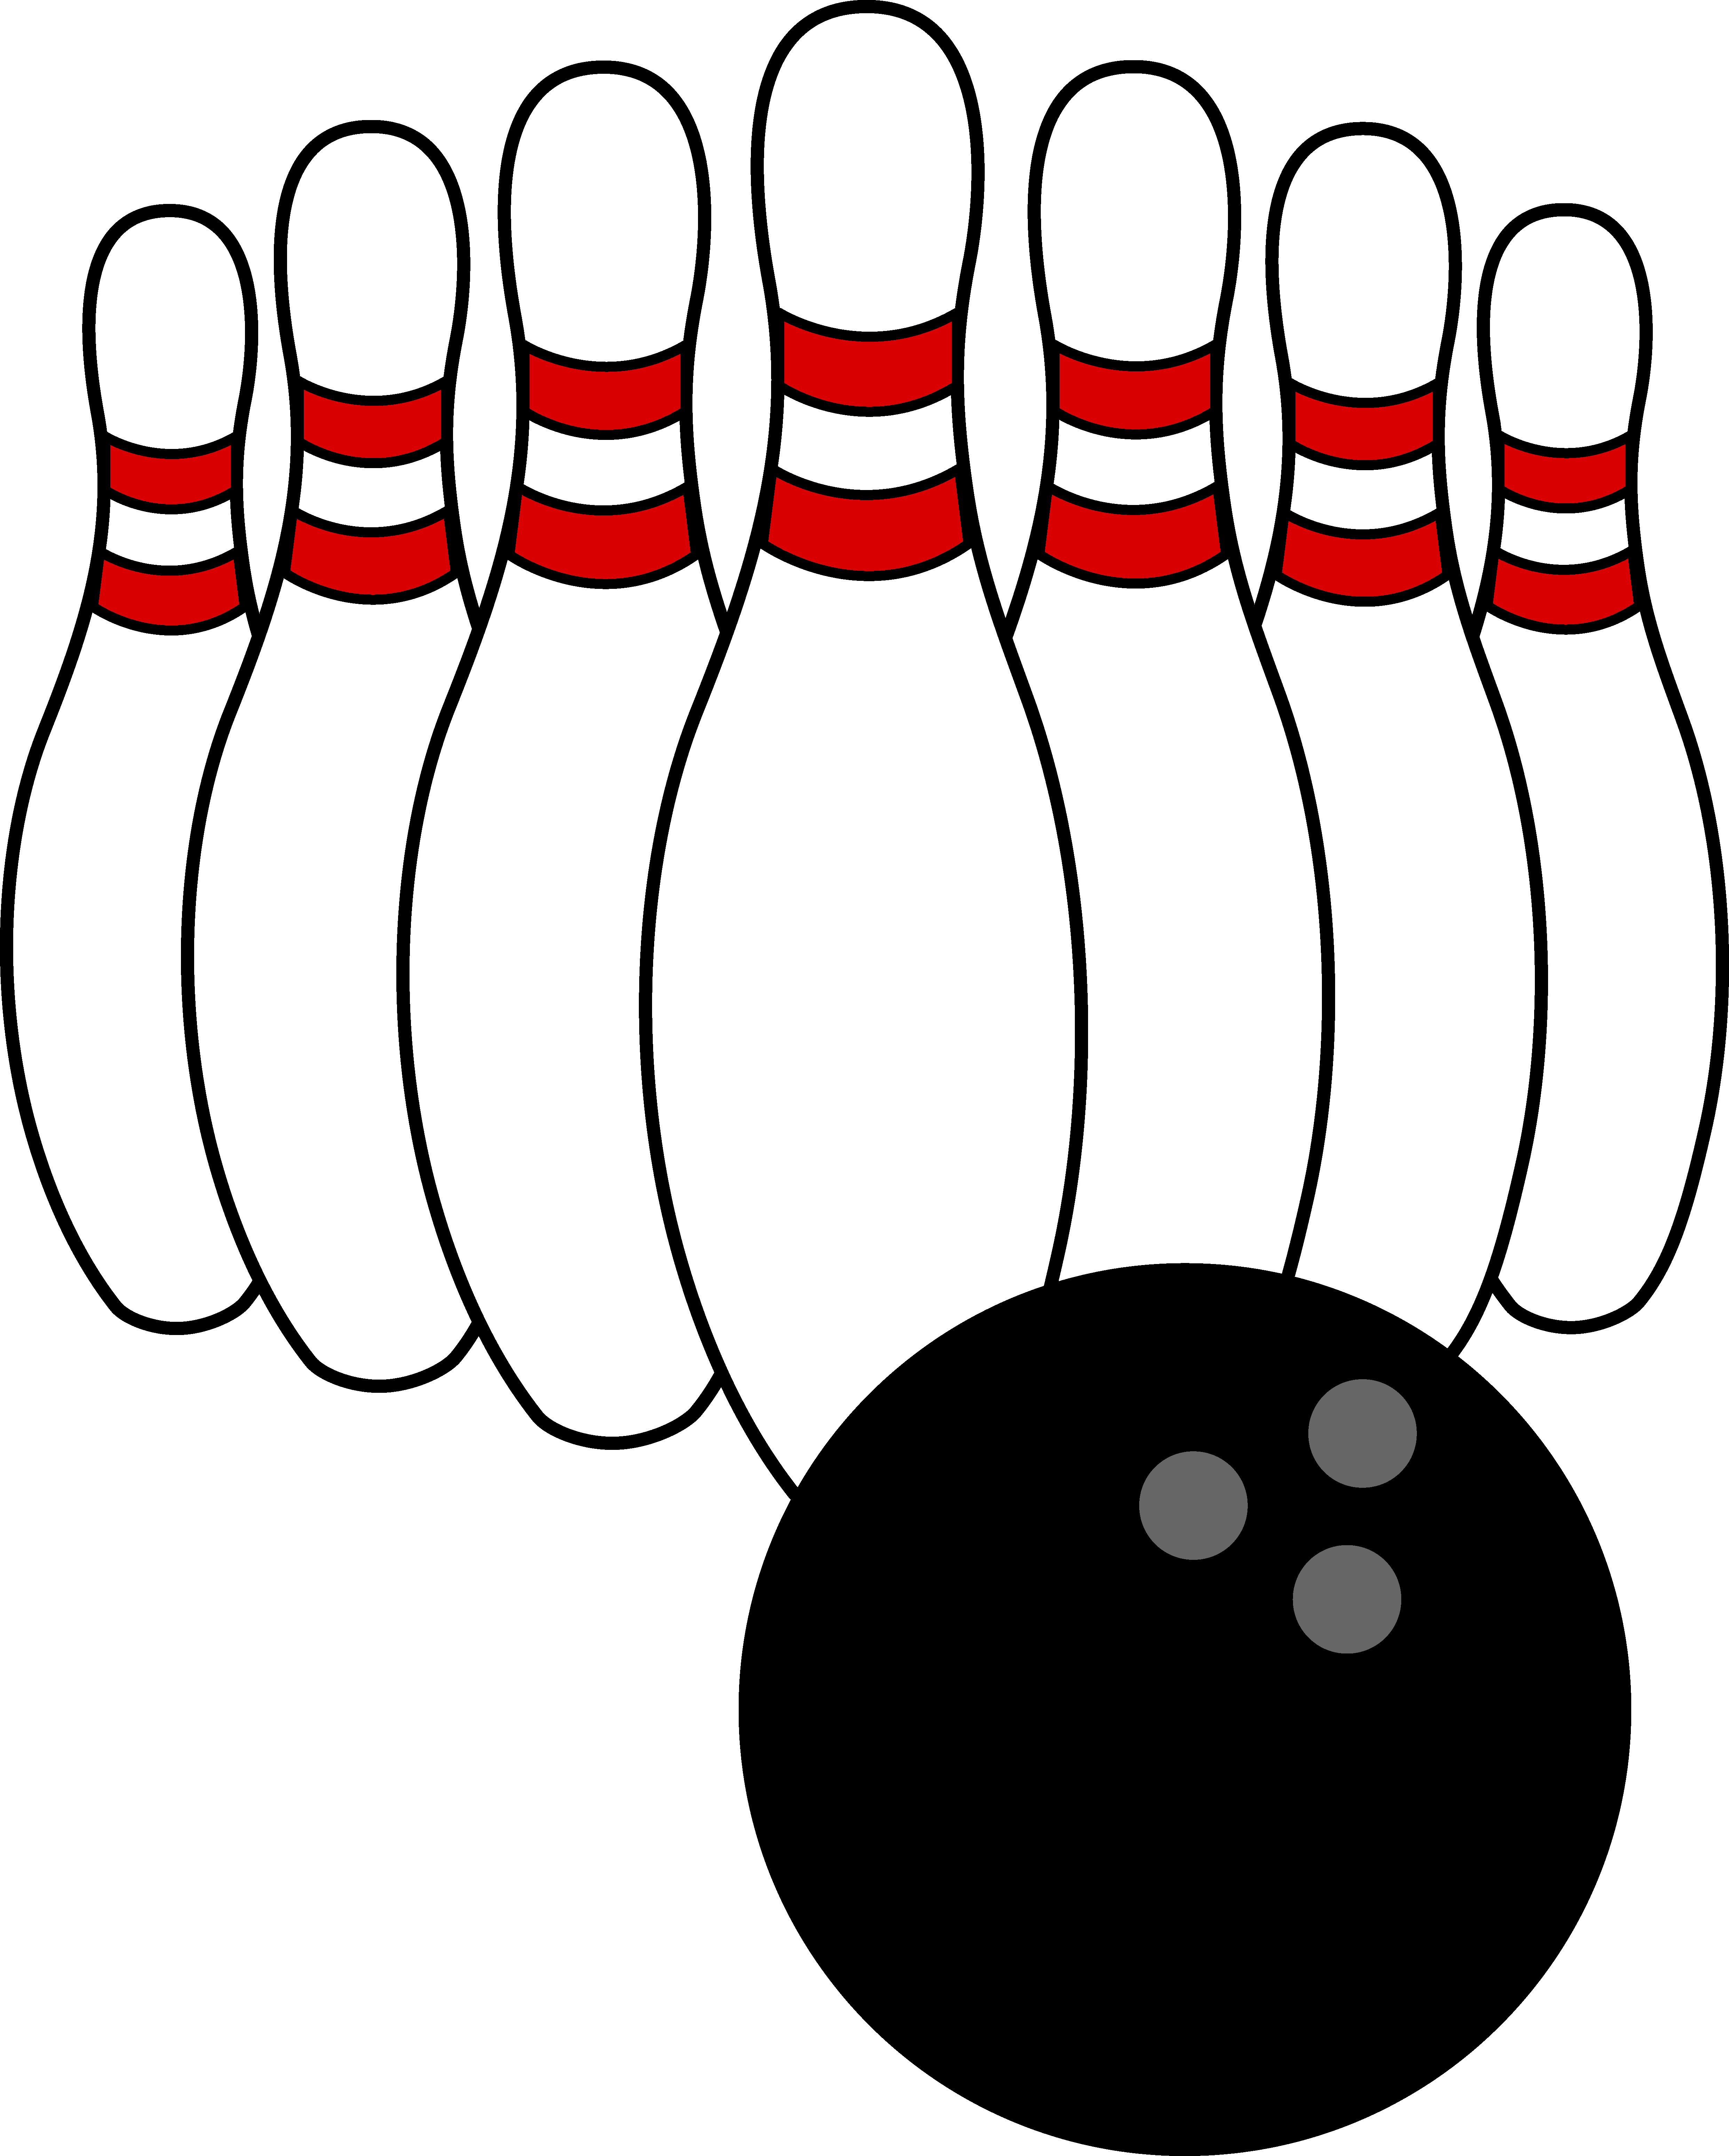 Bowling Pin Setup - ClipArt Best